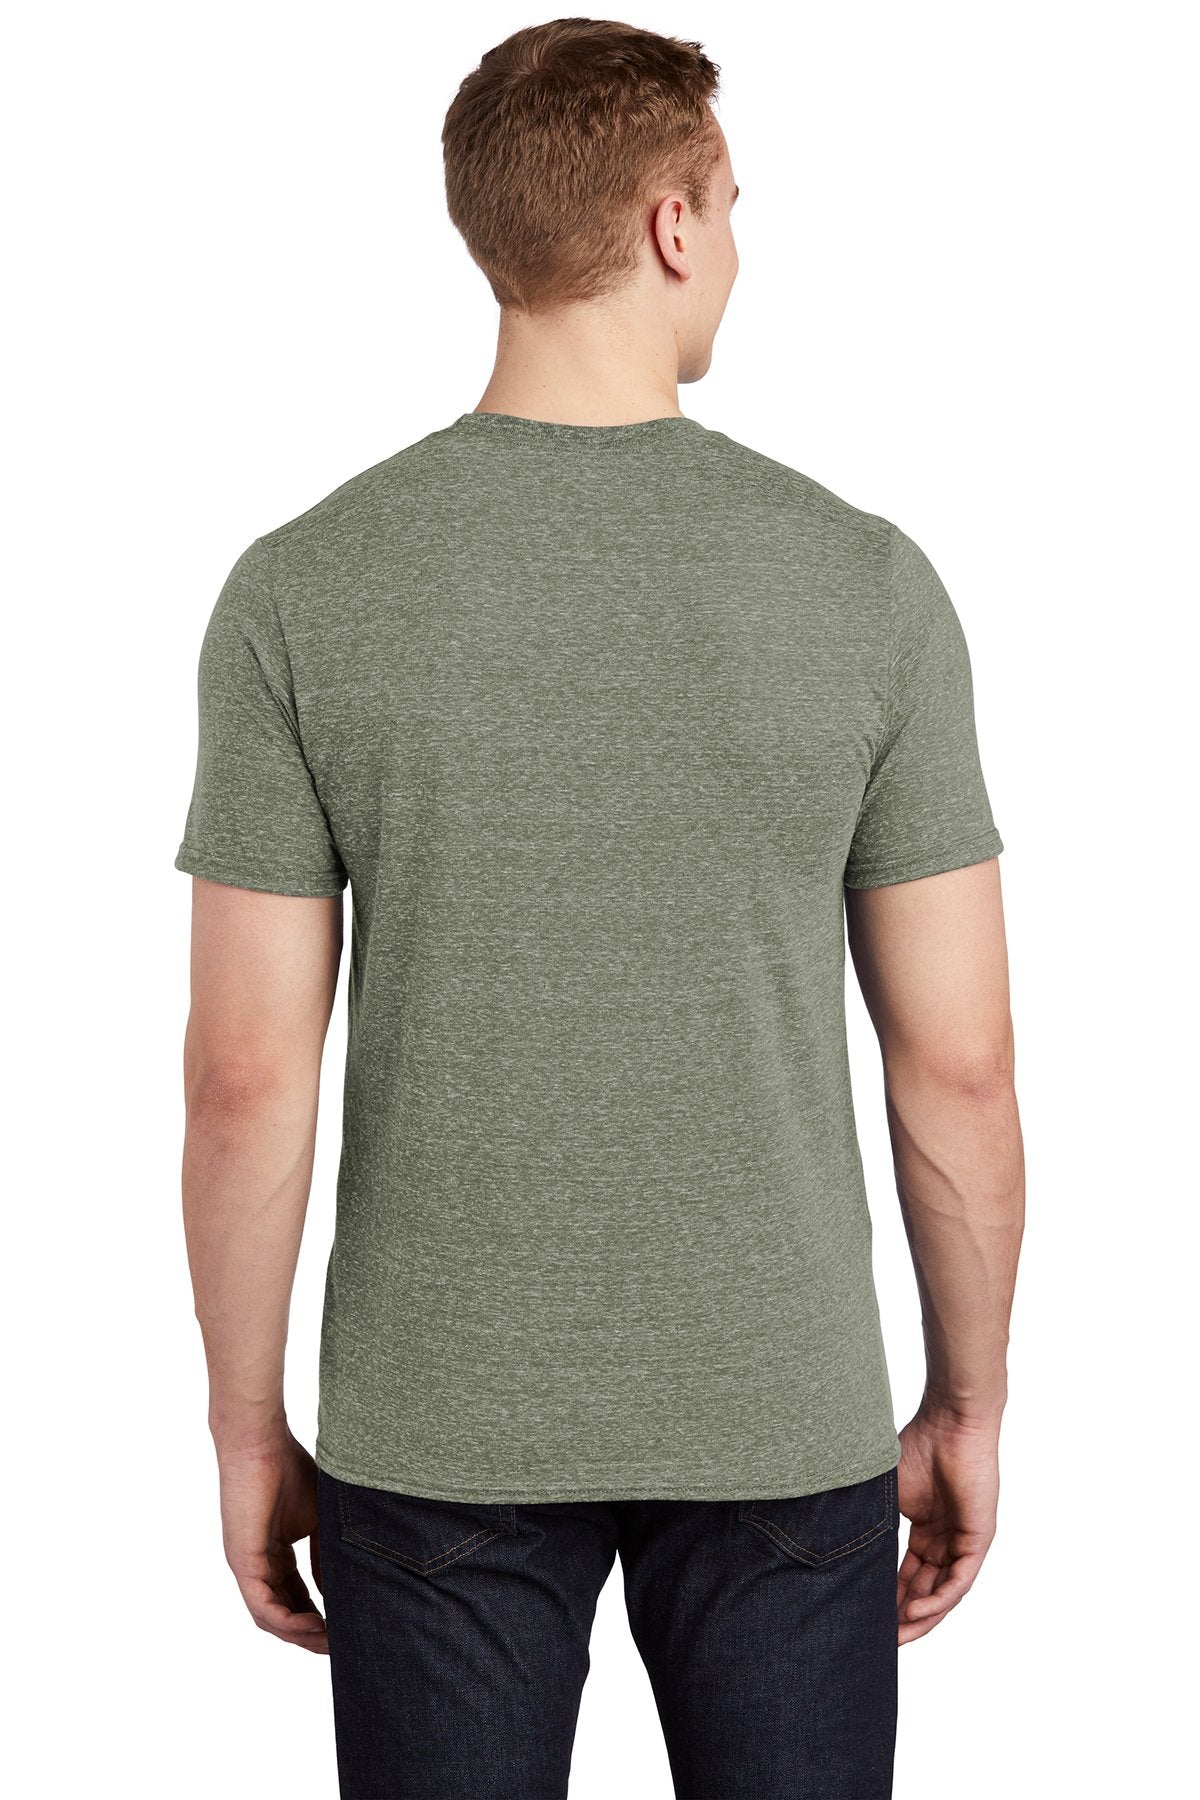 Jerzees Snow Heather Jersey T-Shirt 88M Military Green